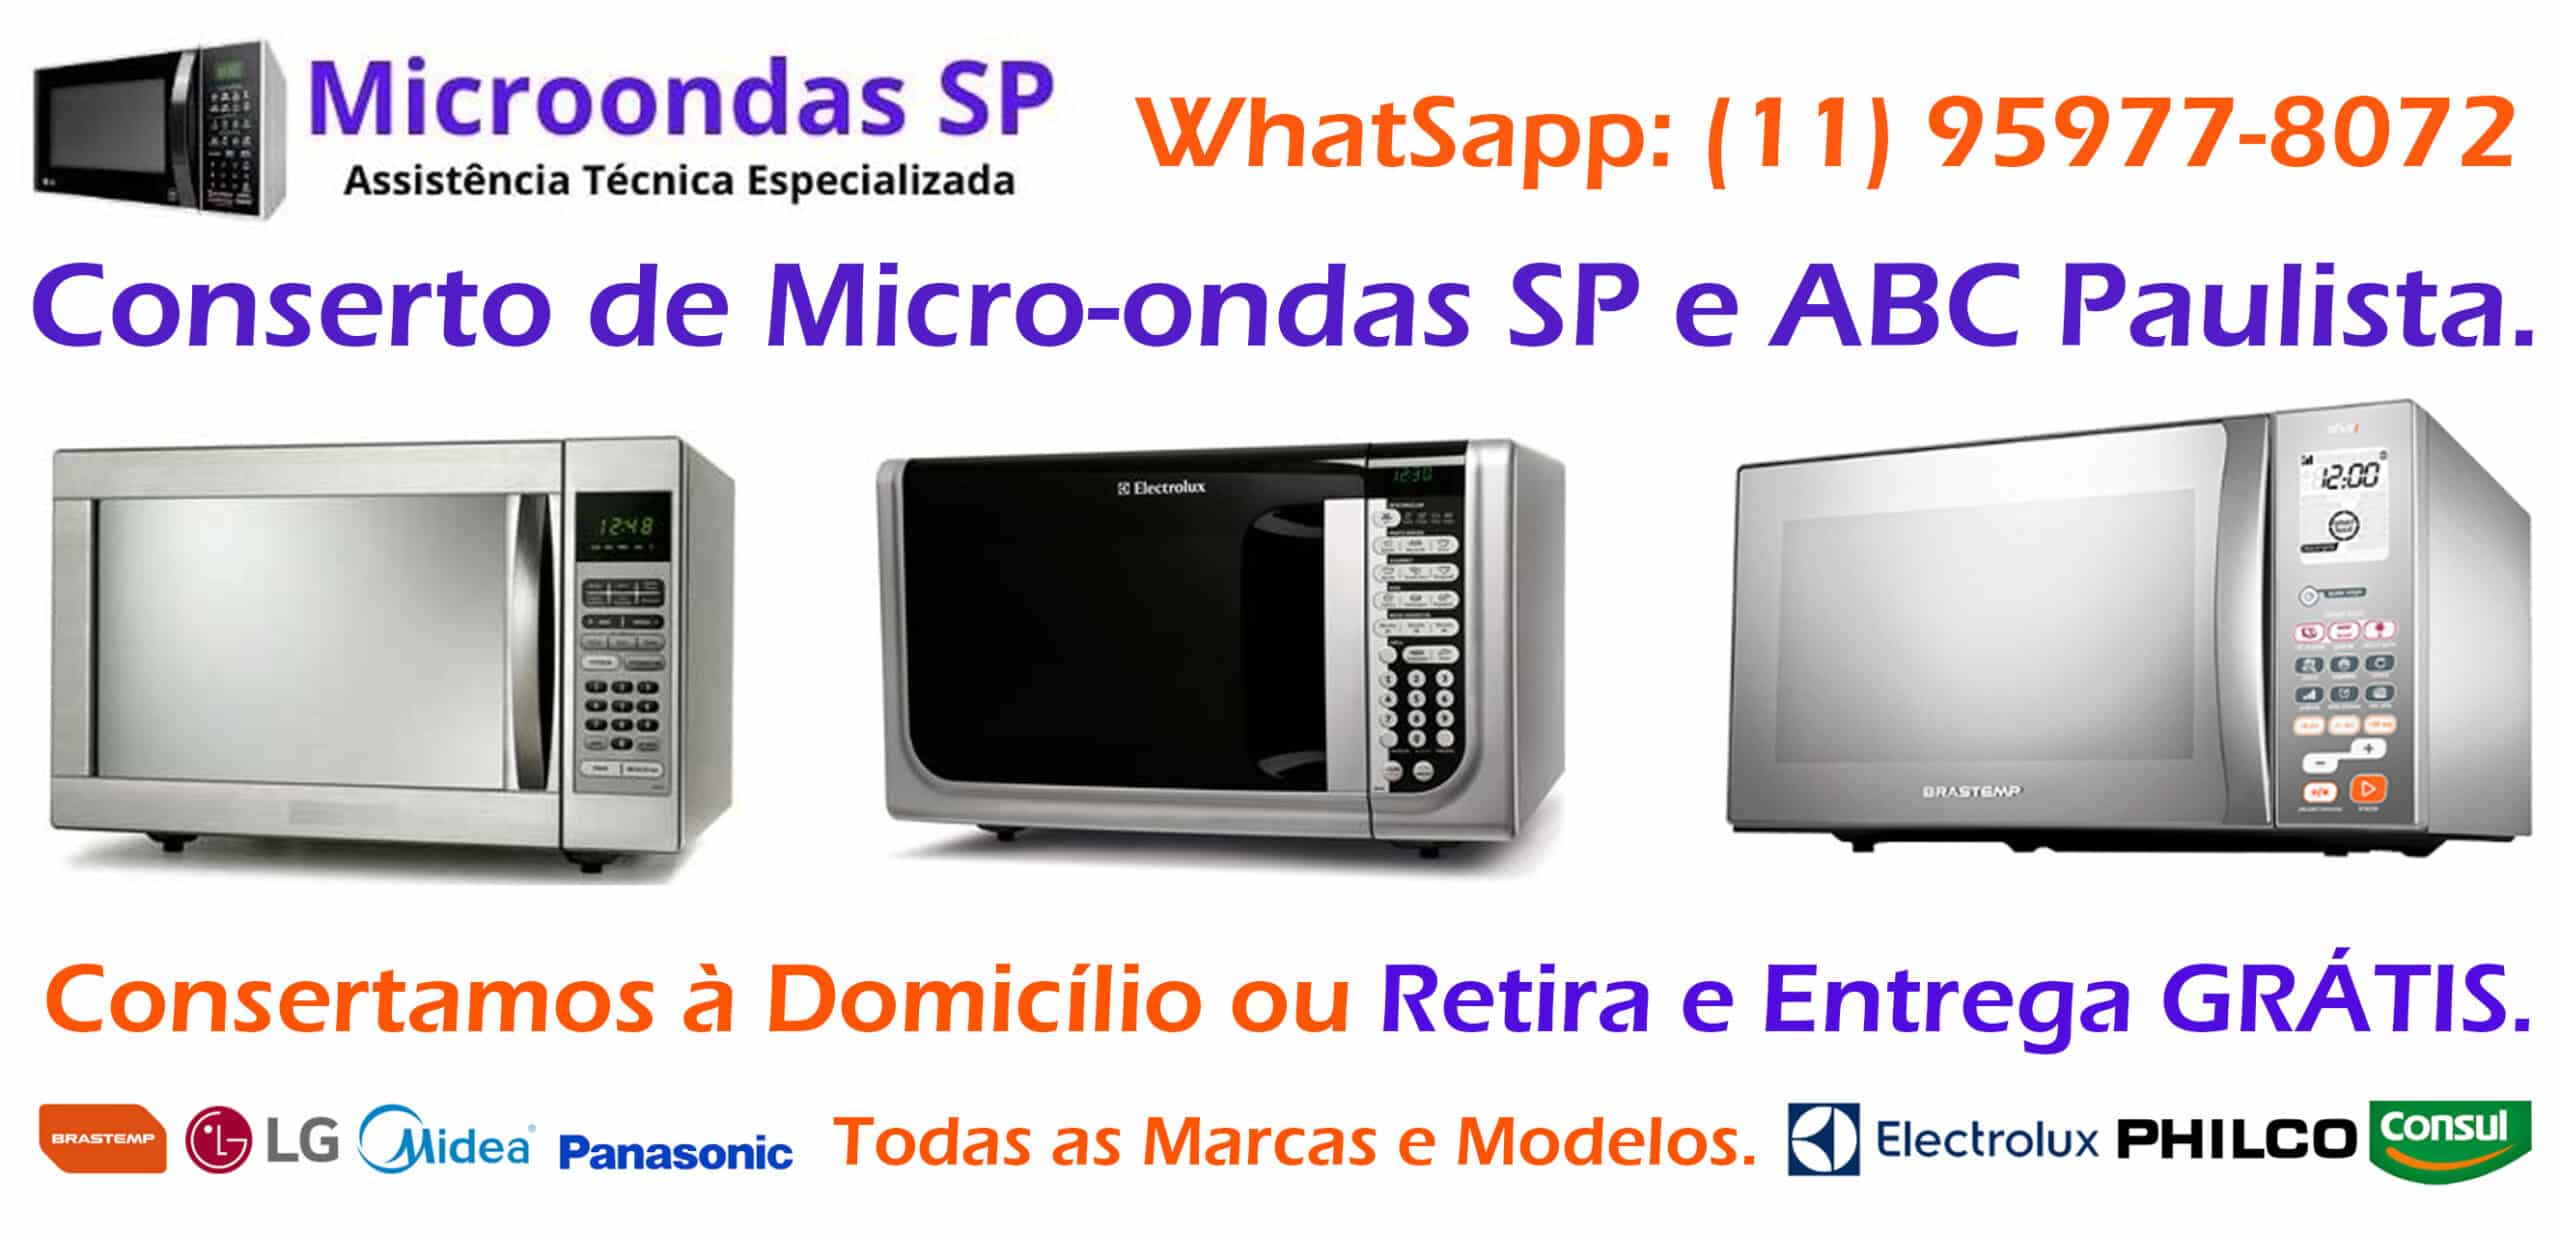 Conserto-Micro-ondas-SP-e-ABC-Paulista-scaled Conserto de Microondas SP e ABC